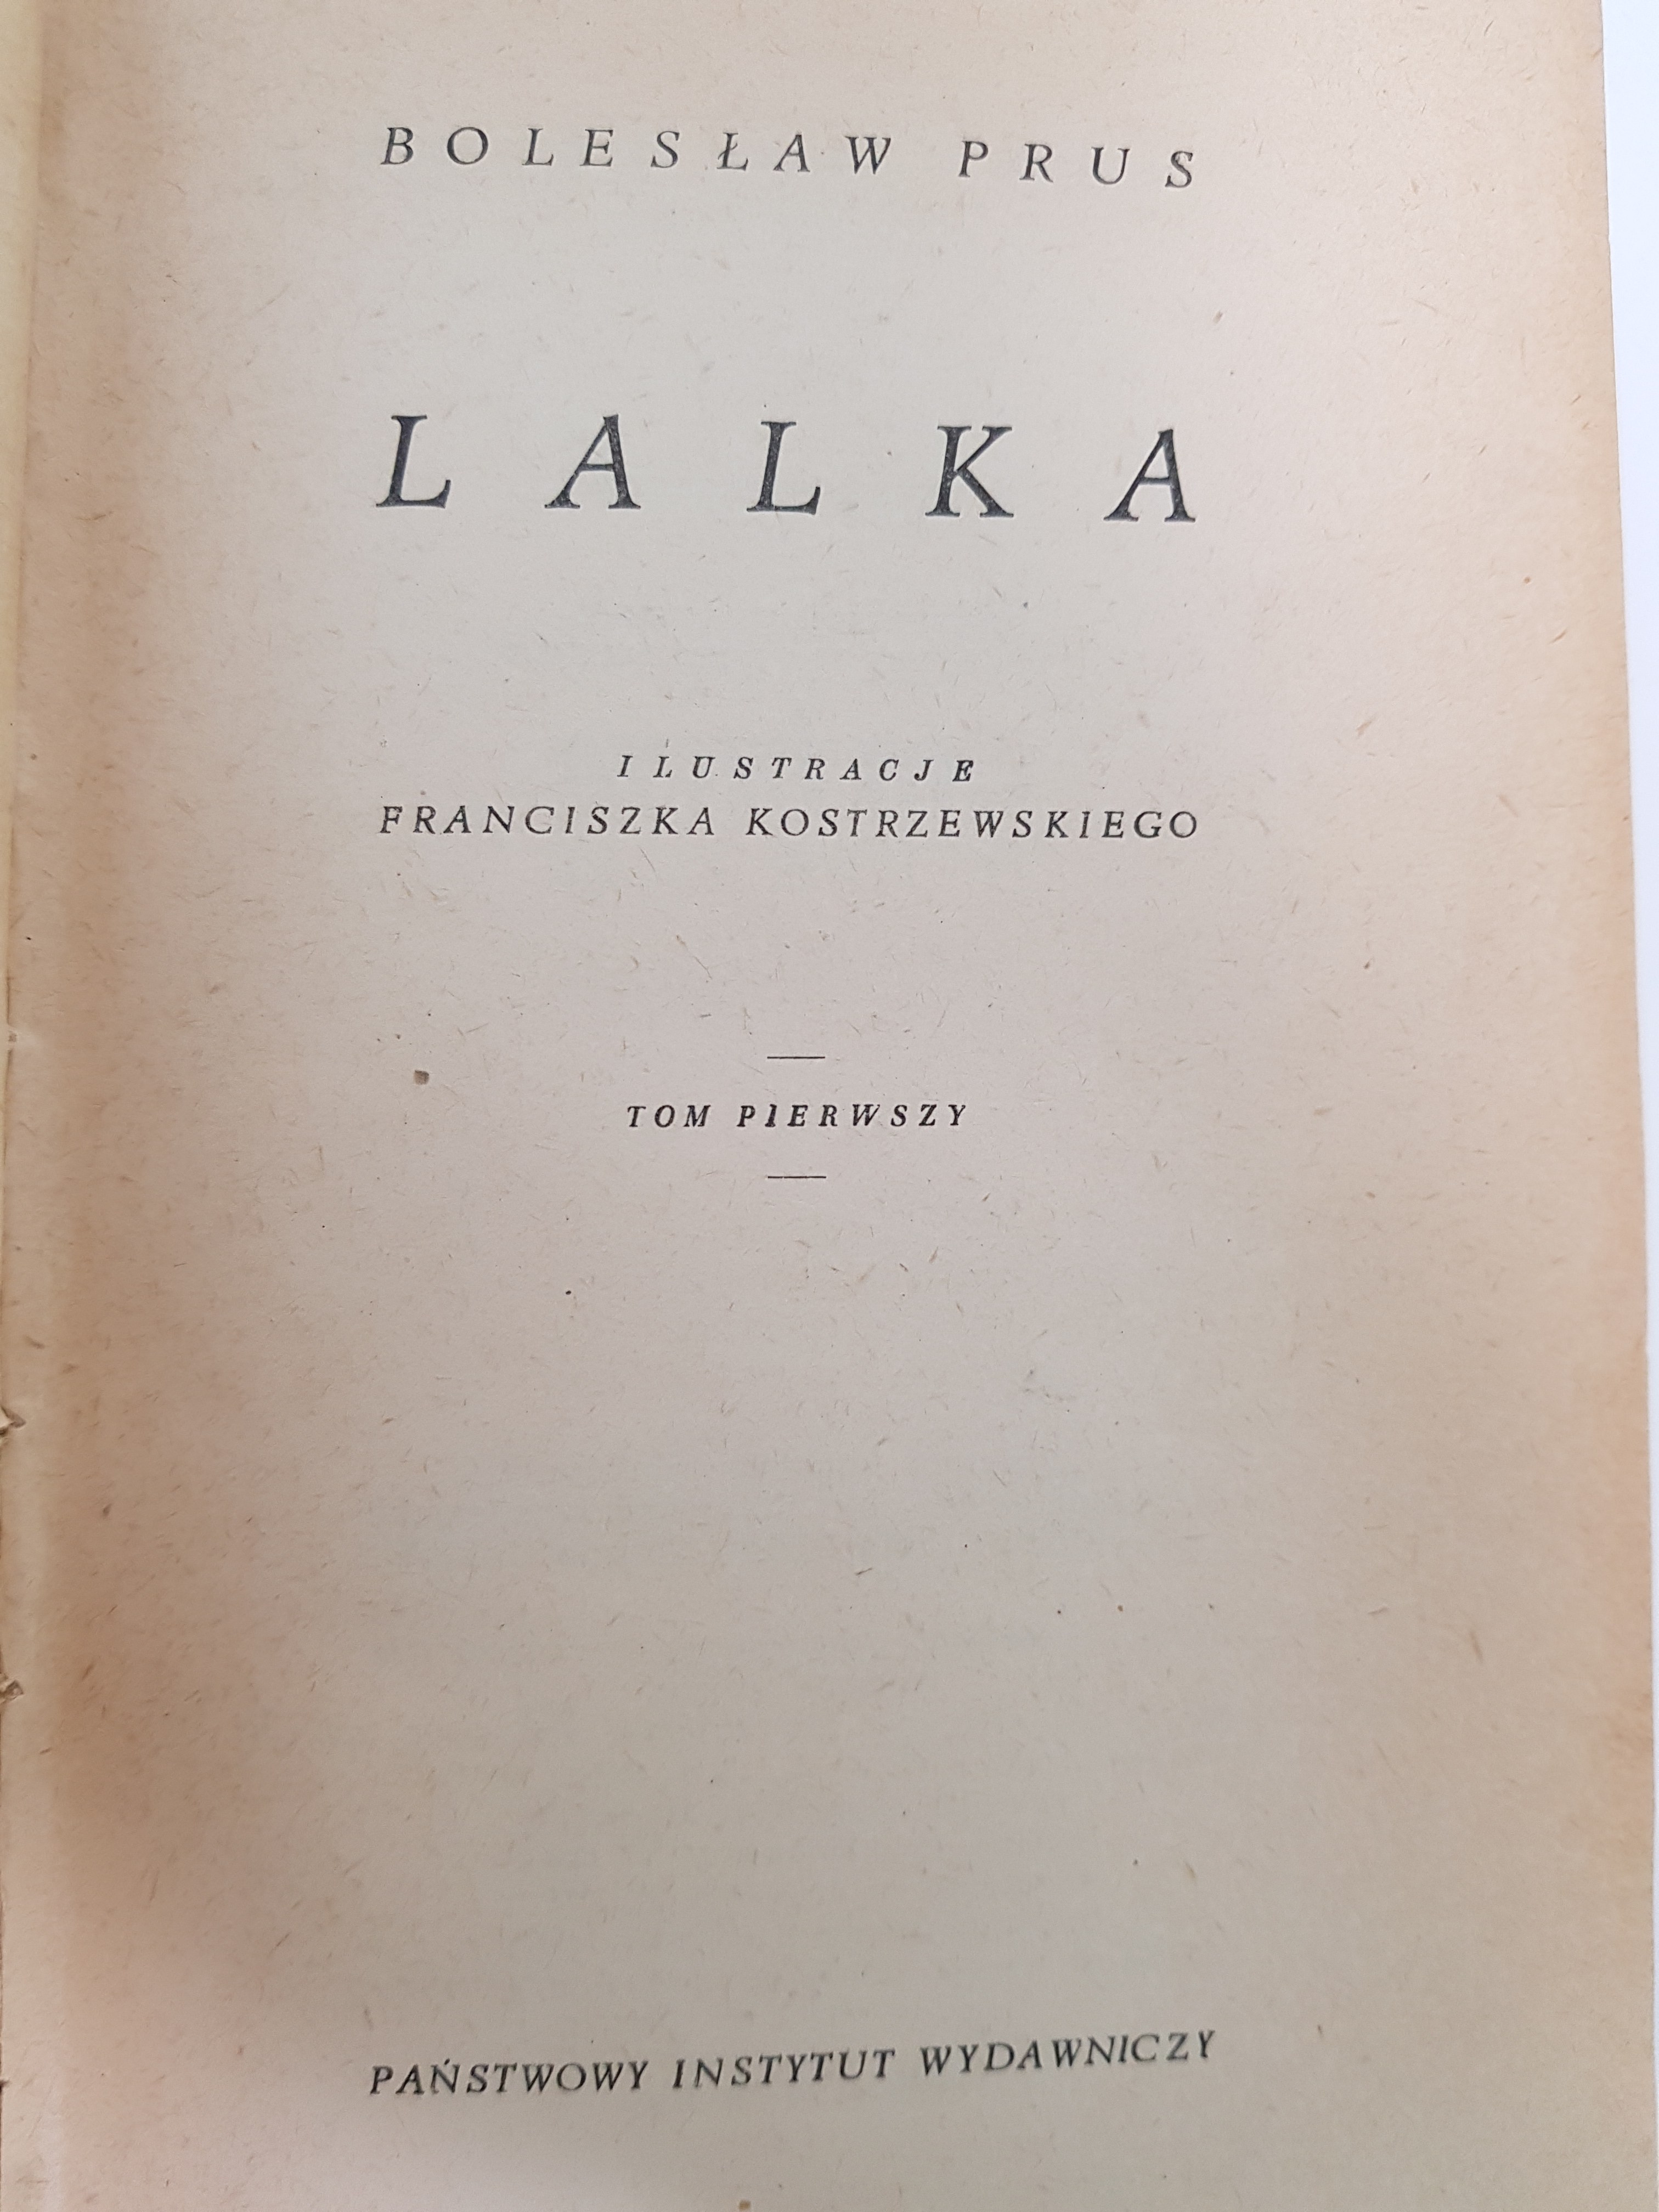 Lalka by Bolesław Prus